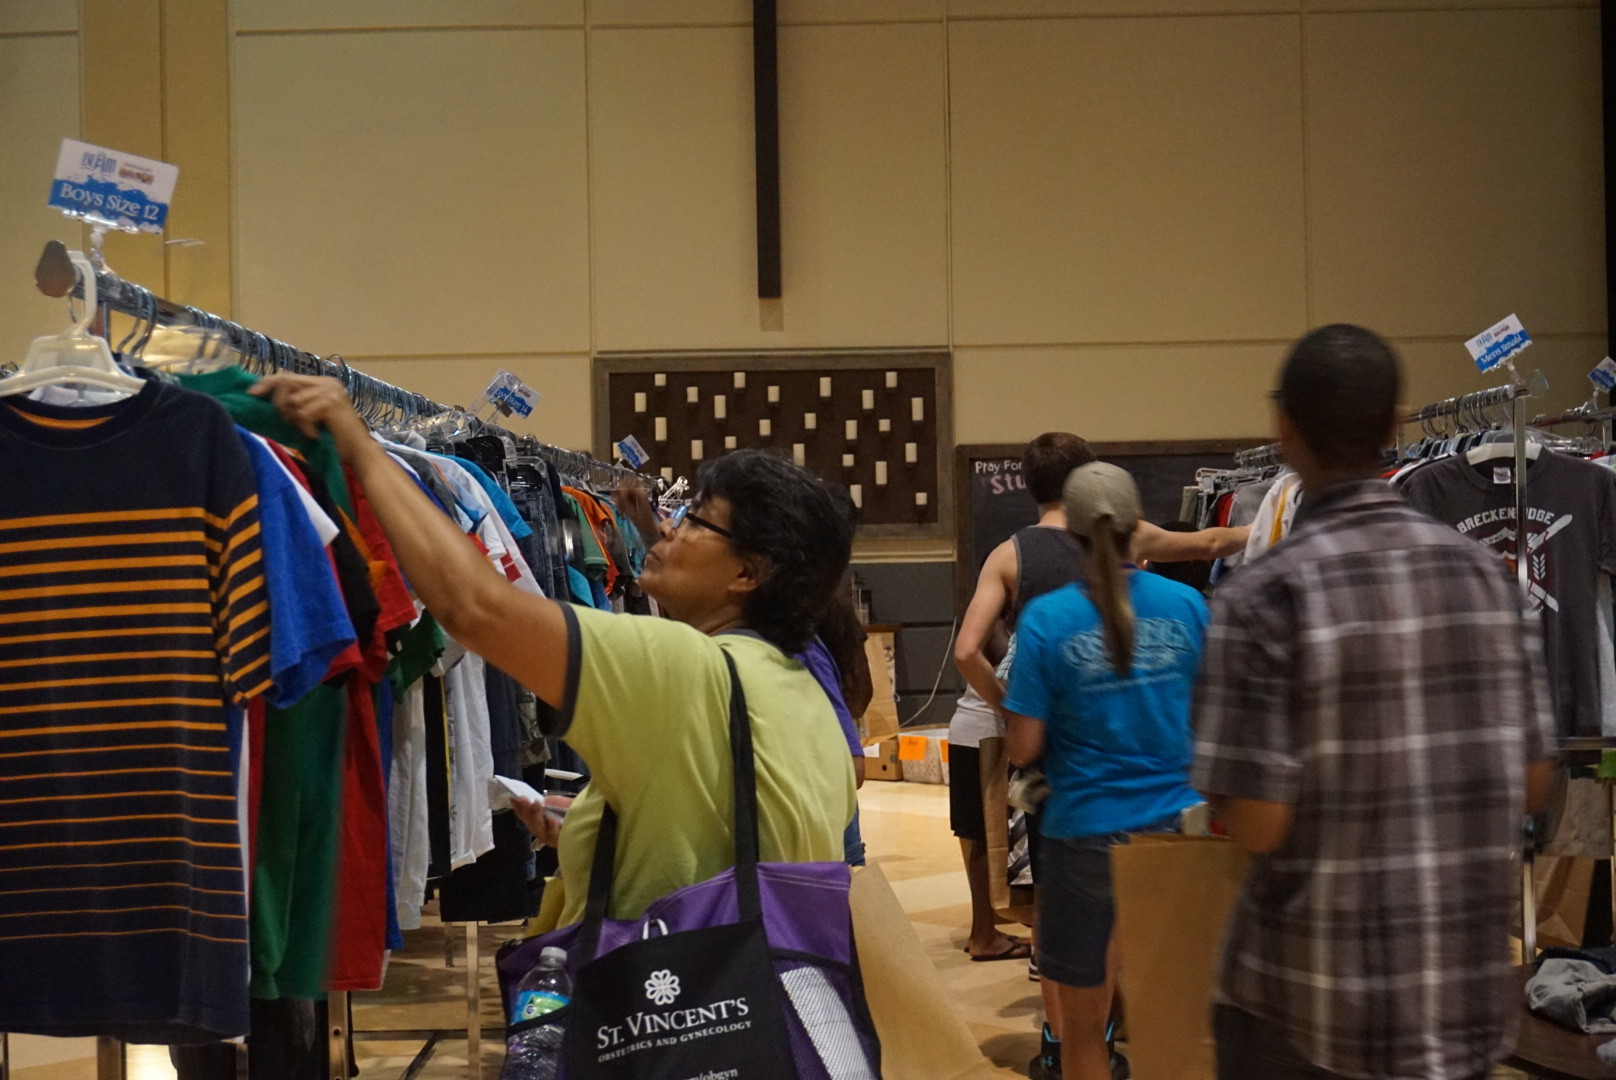 Shoppers peruse racks of clothing